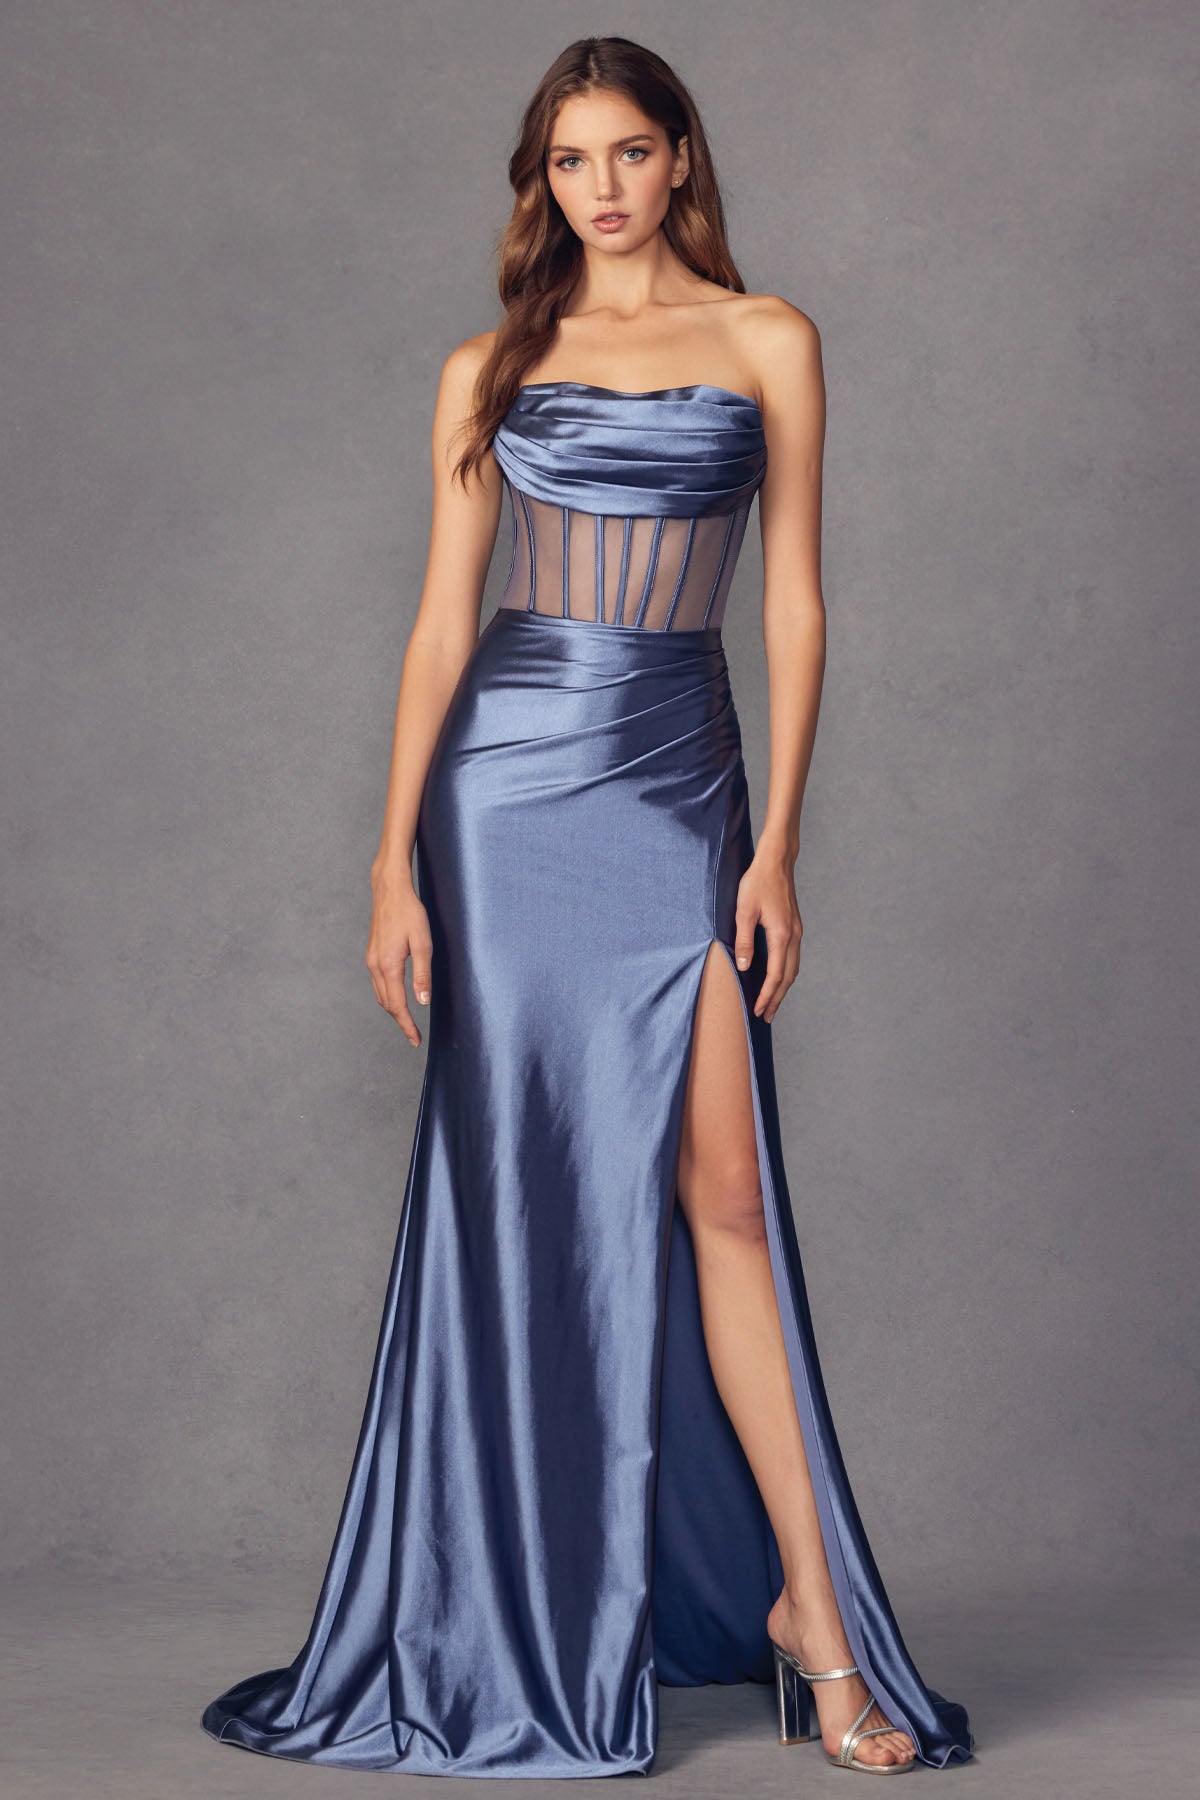 Smoky blue sheer corset top evening dress